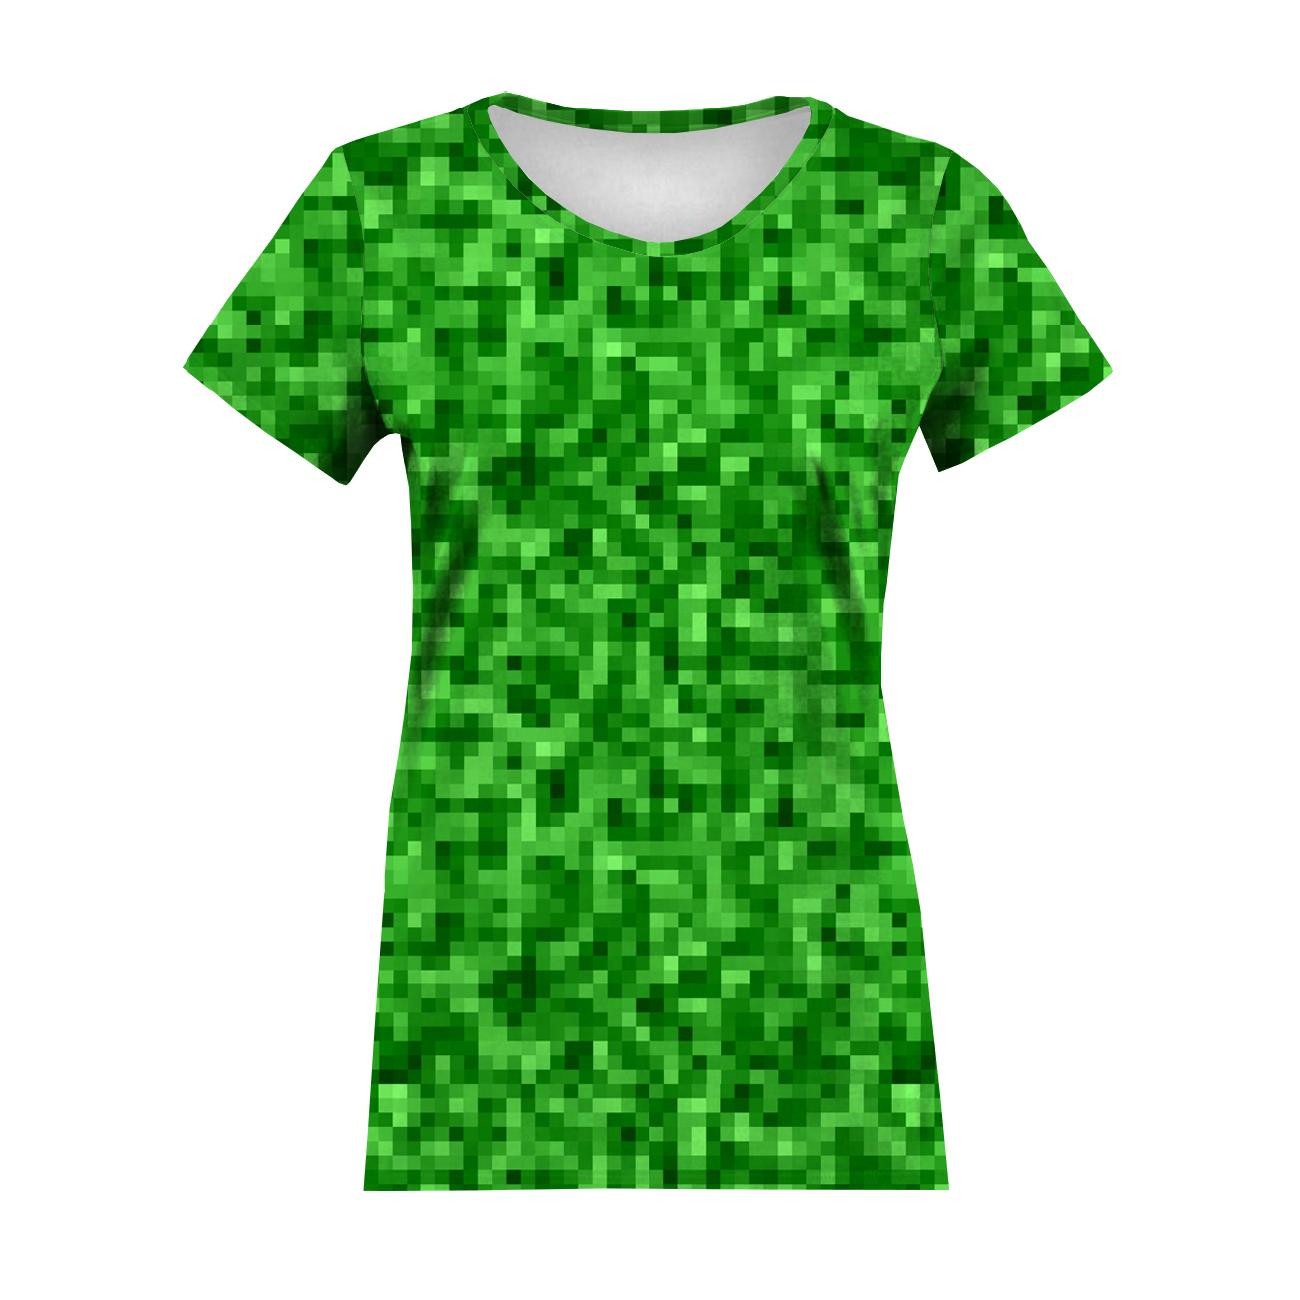 WOMEN’S T-SHIRT - PIXELS pat. 2 / green - single jersey